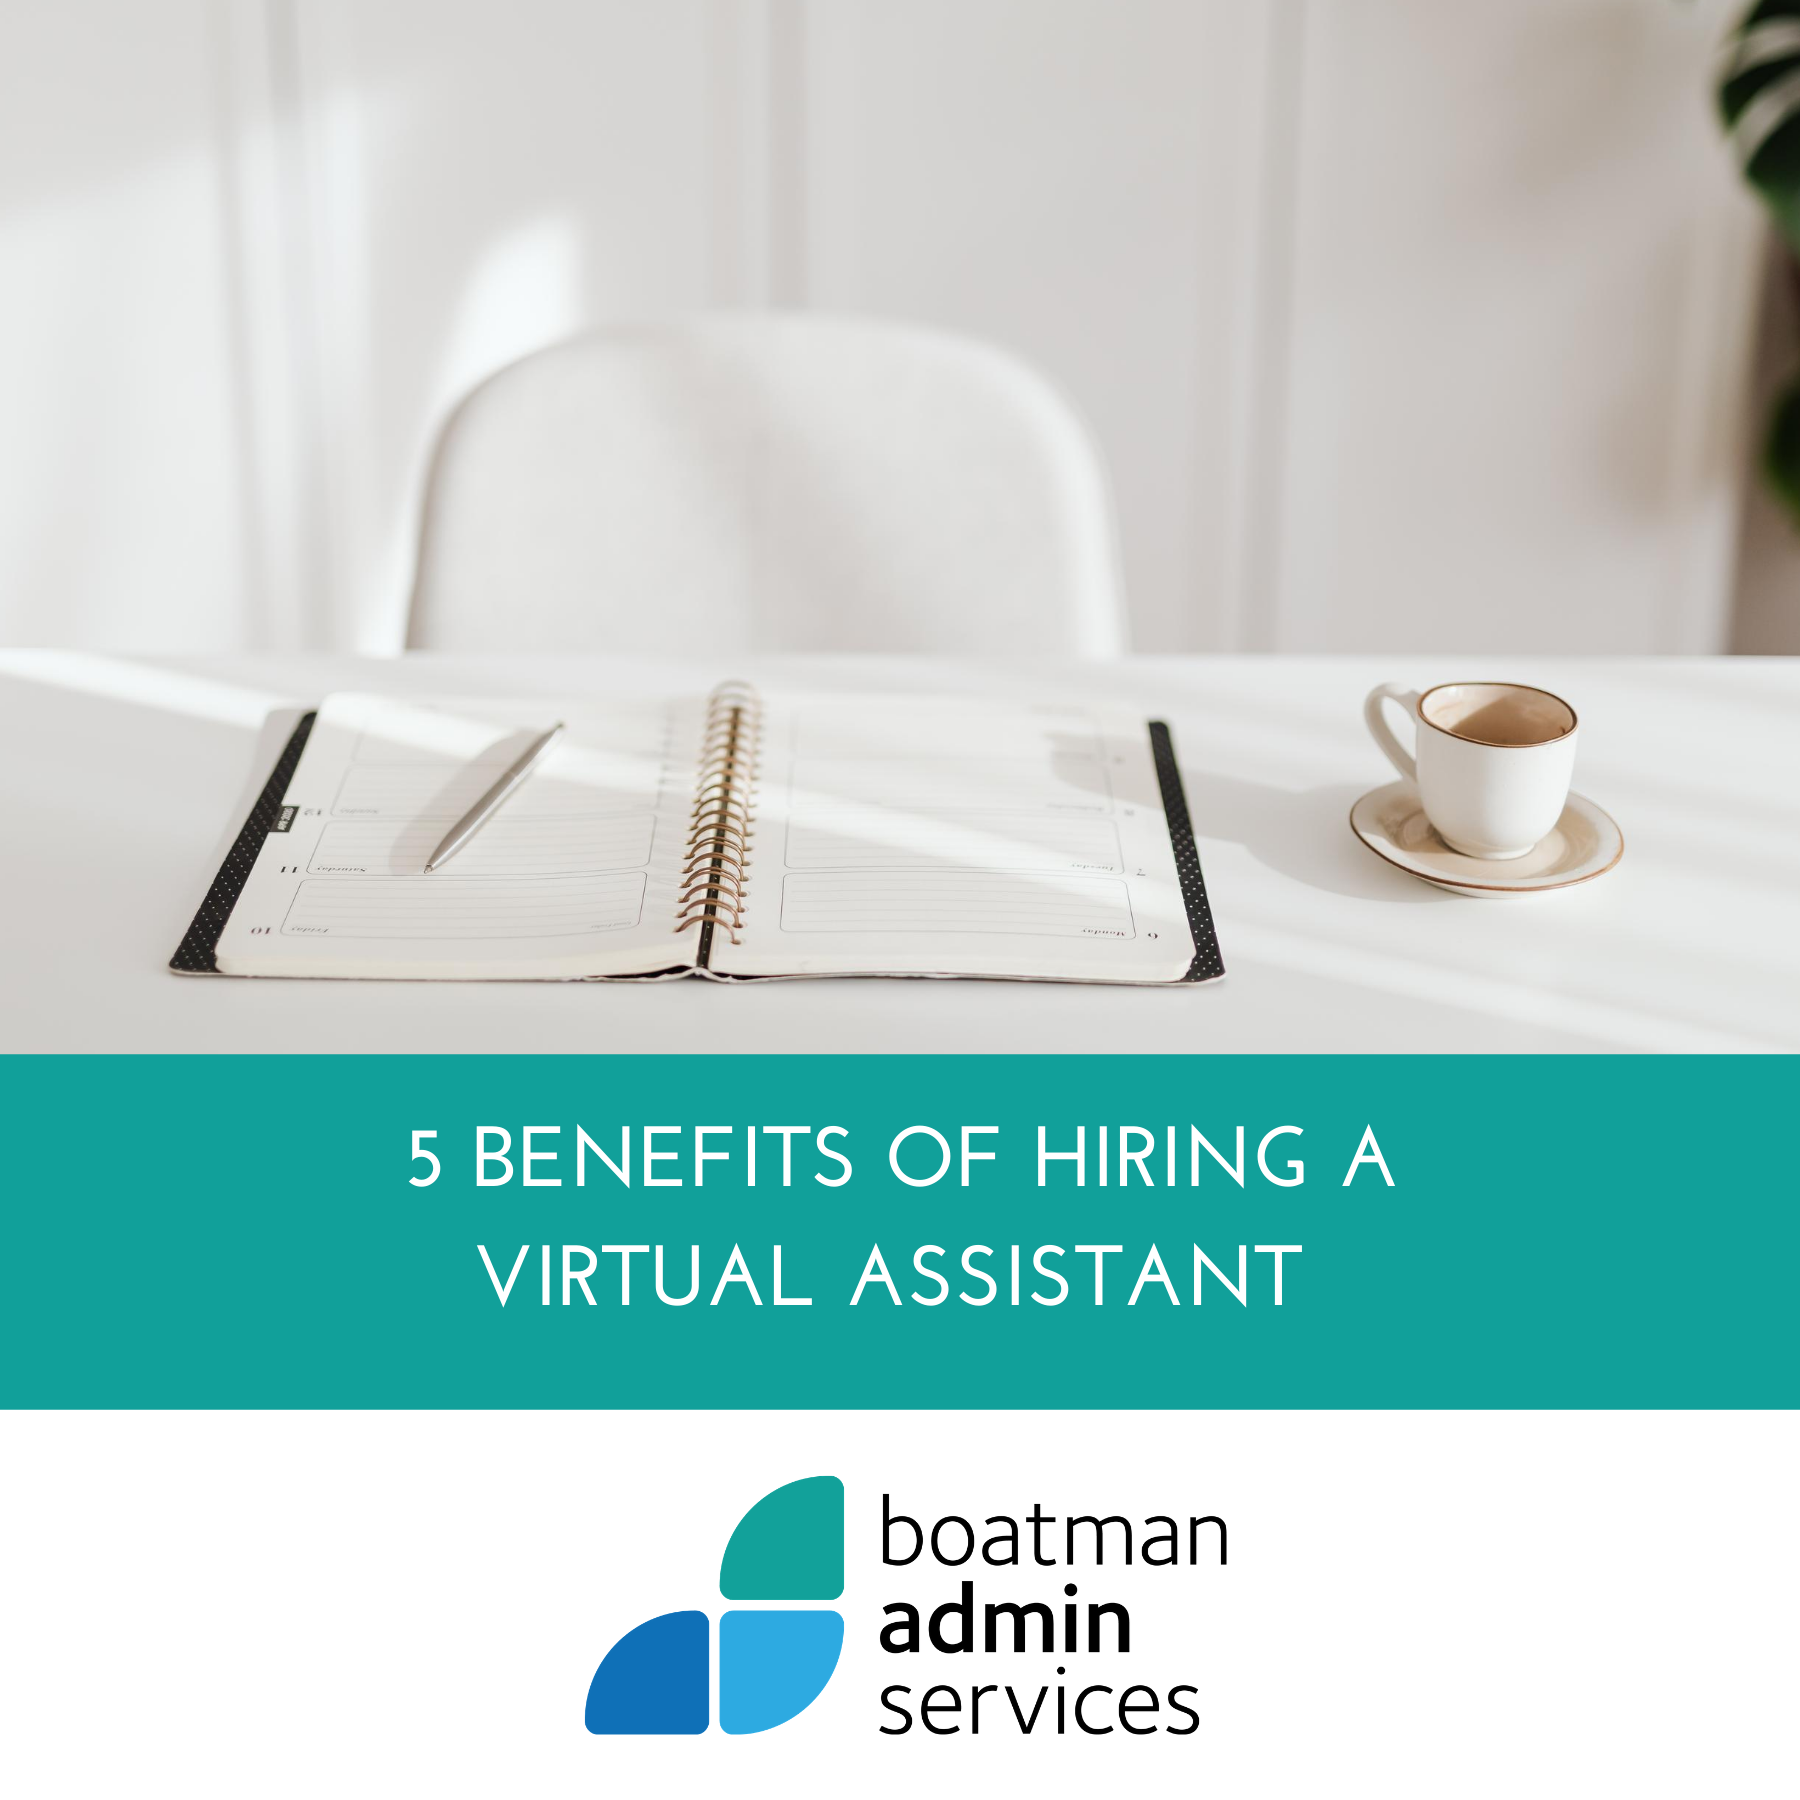 5 Benefits of Hiring a Virtual Assistant